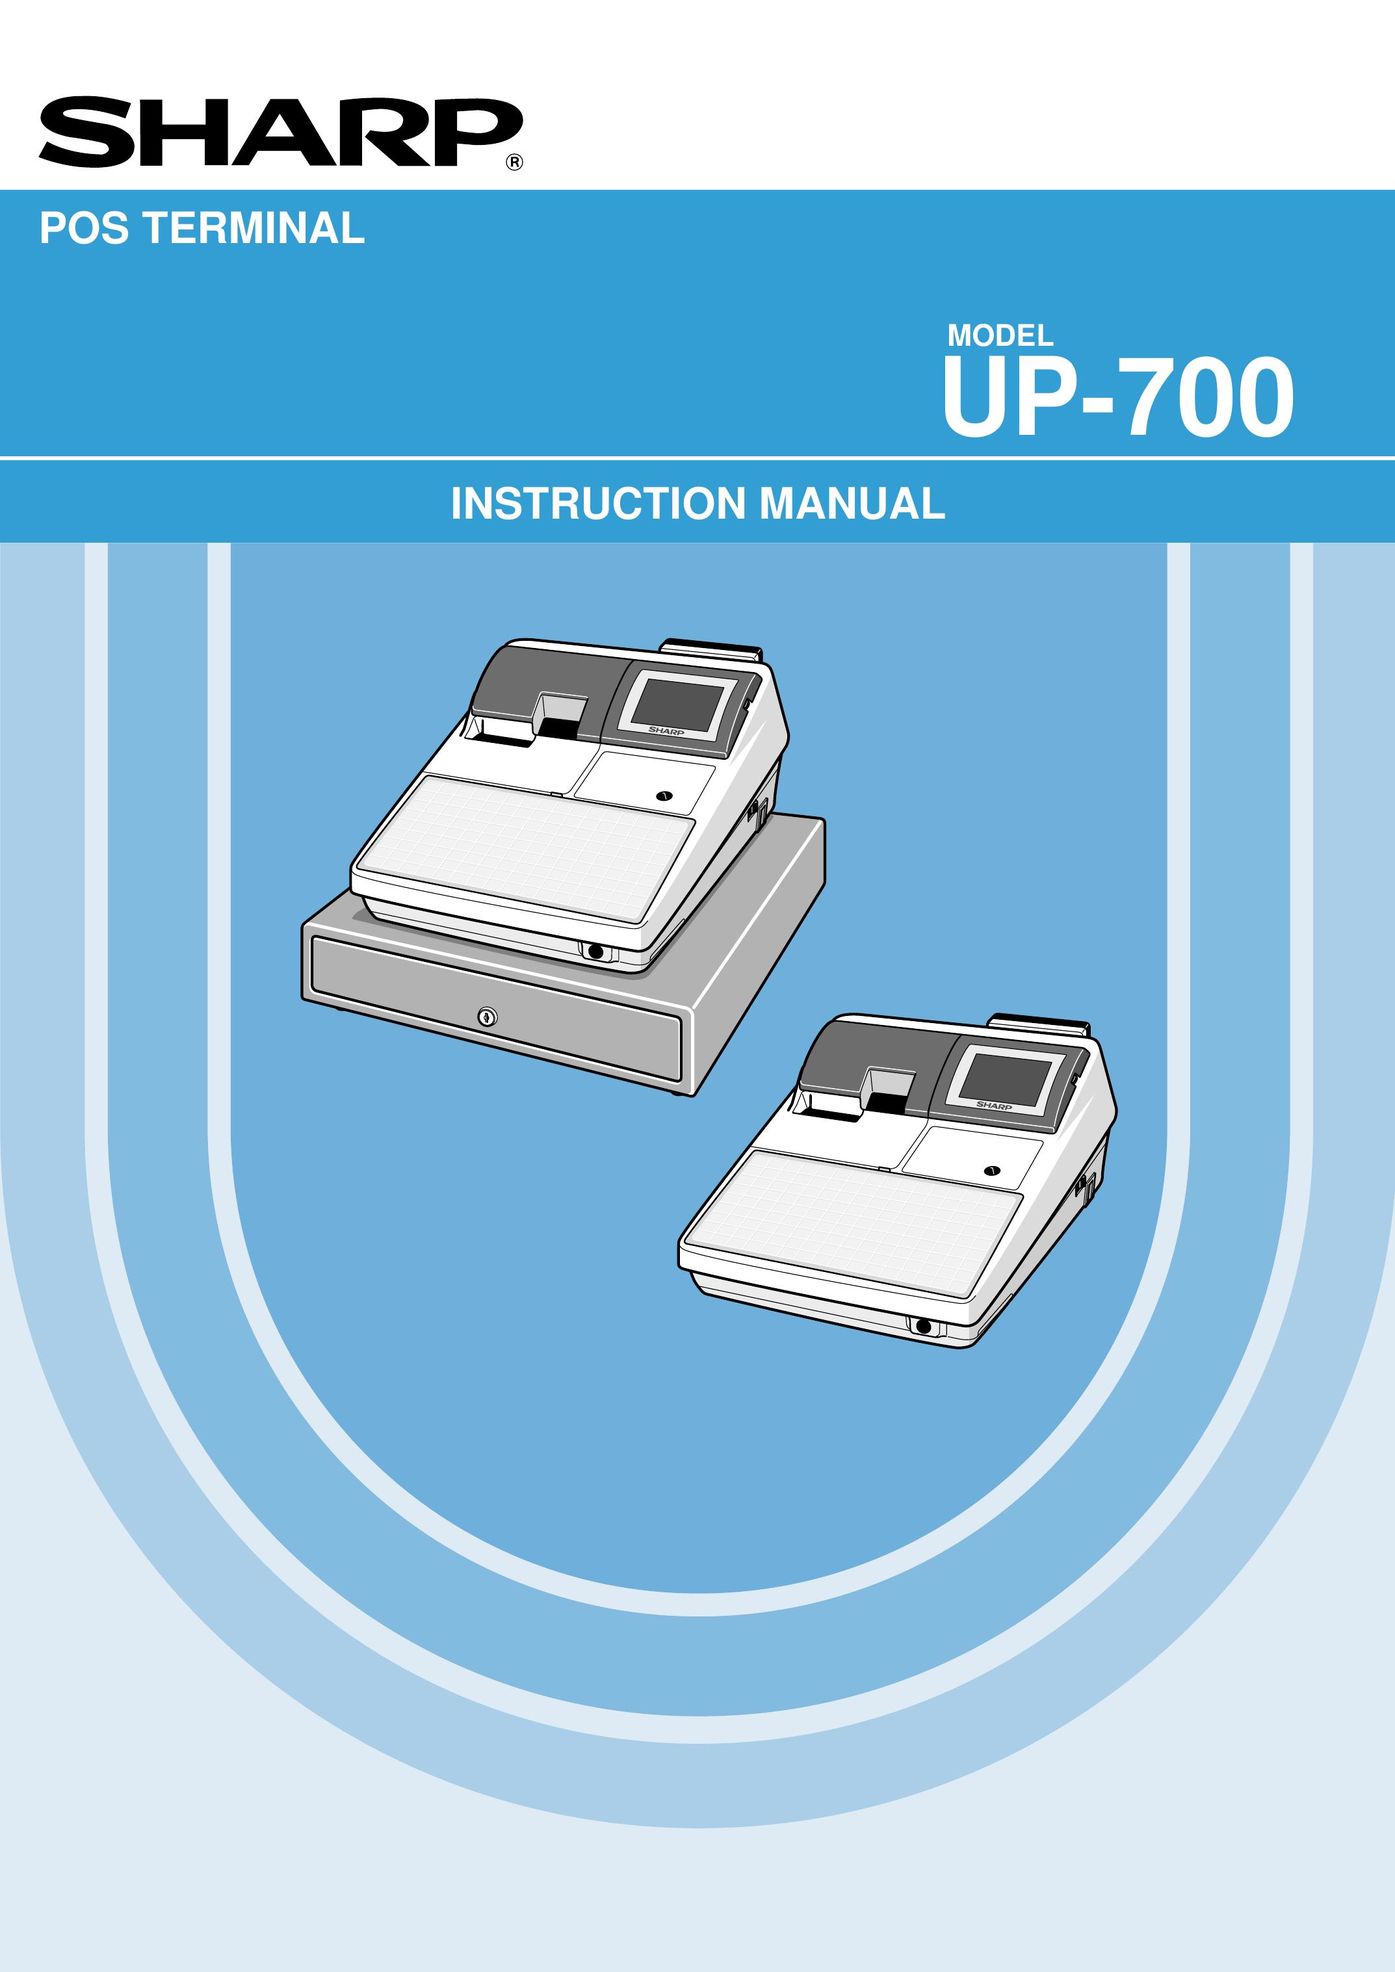 Sharp UP-700 Cash Register User Manual